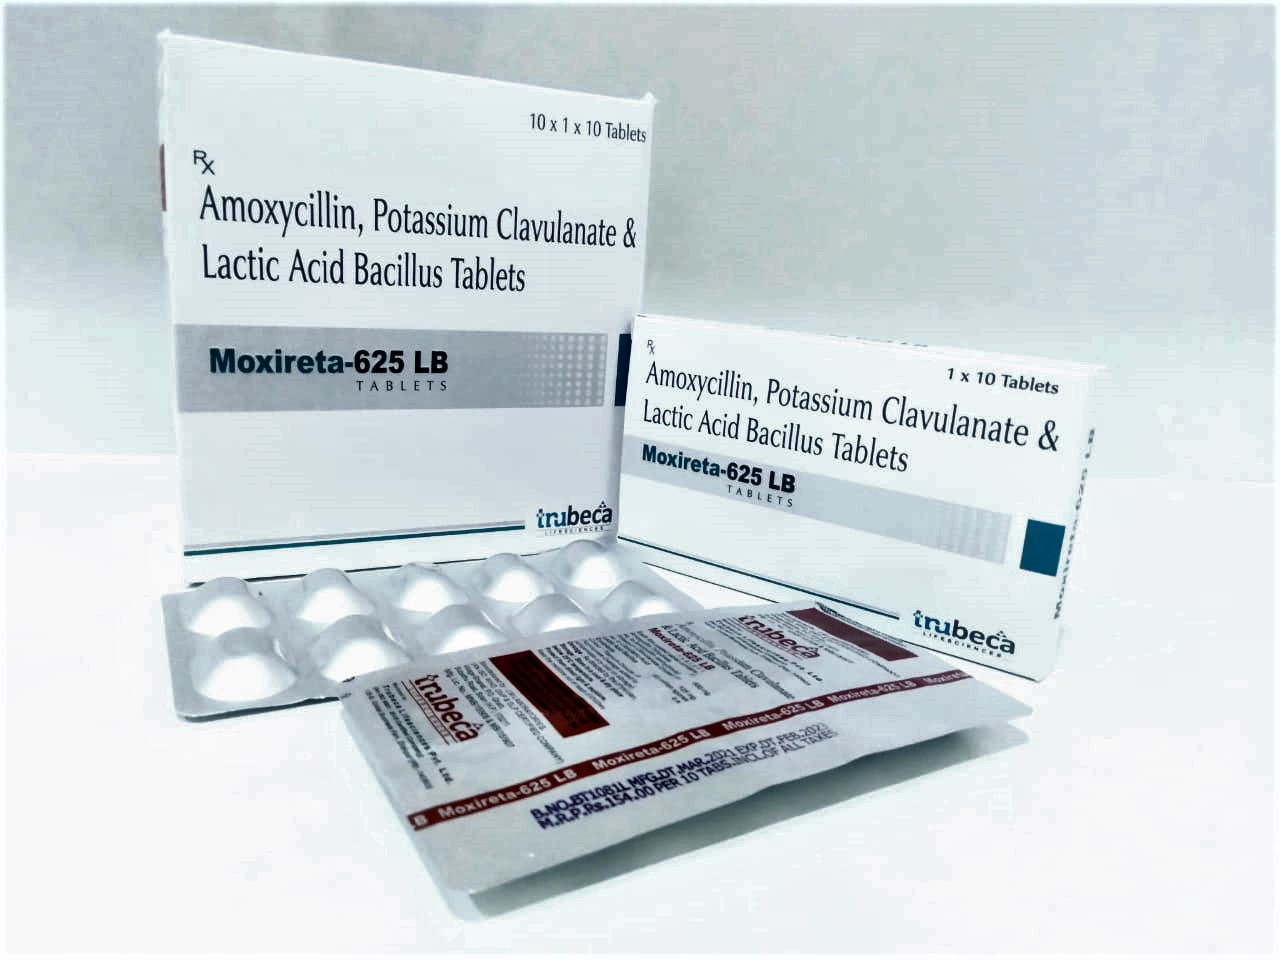 amoxycillin 500mg + potassium clavulanate 125mg + lactic acid bacillus tablet